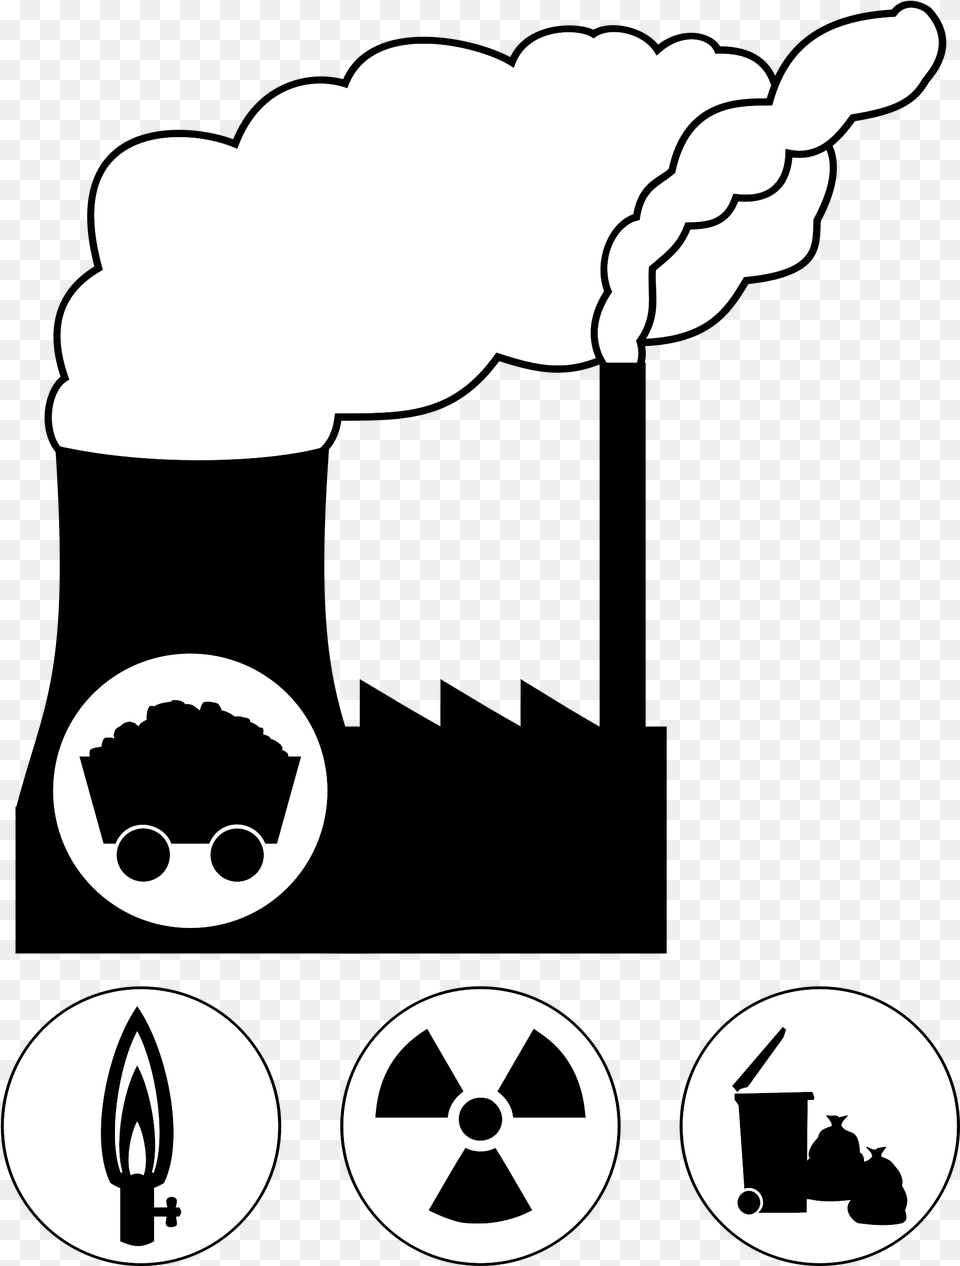 Coal Mining Symbols Clip Art Clipart Best Coal Fired Power Plant Clipart, Stencil, Symbol, Person, Body Part Png